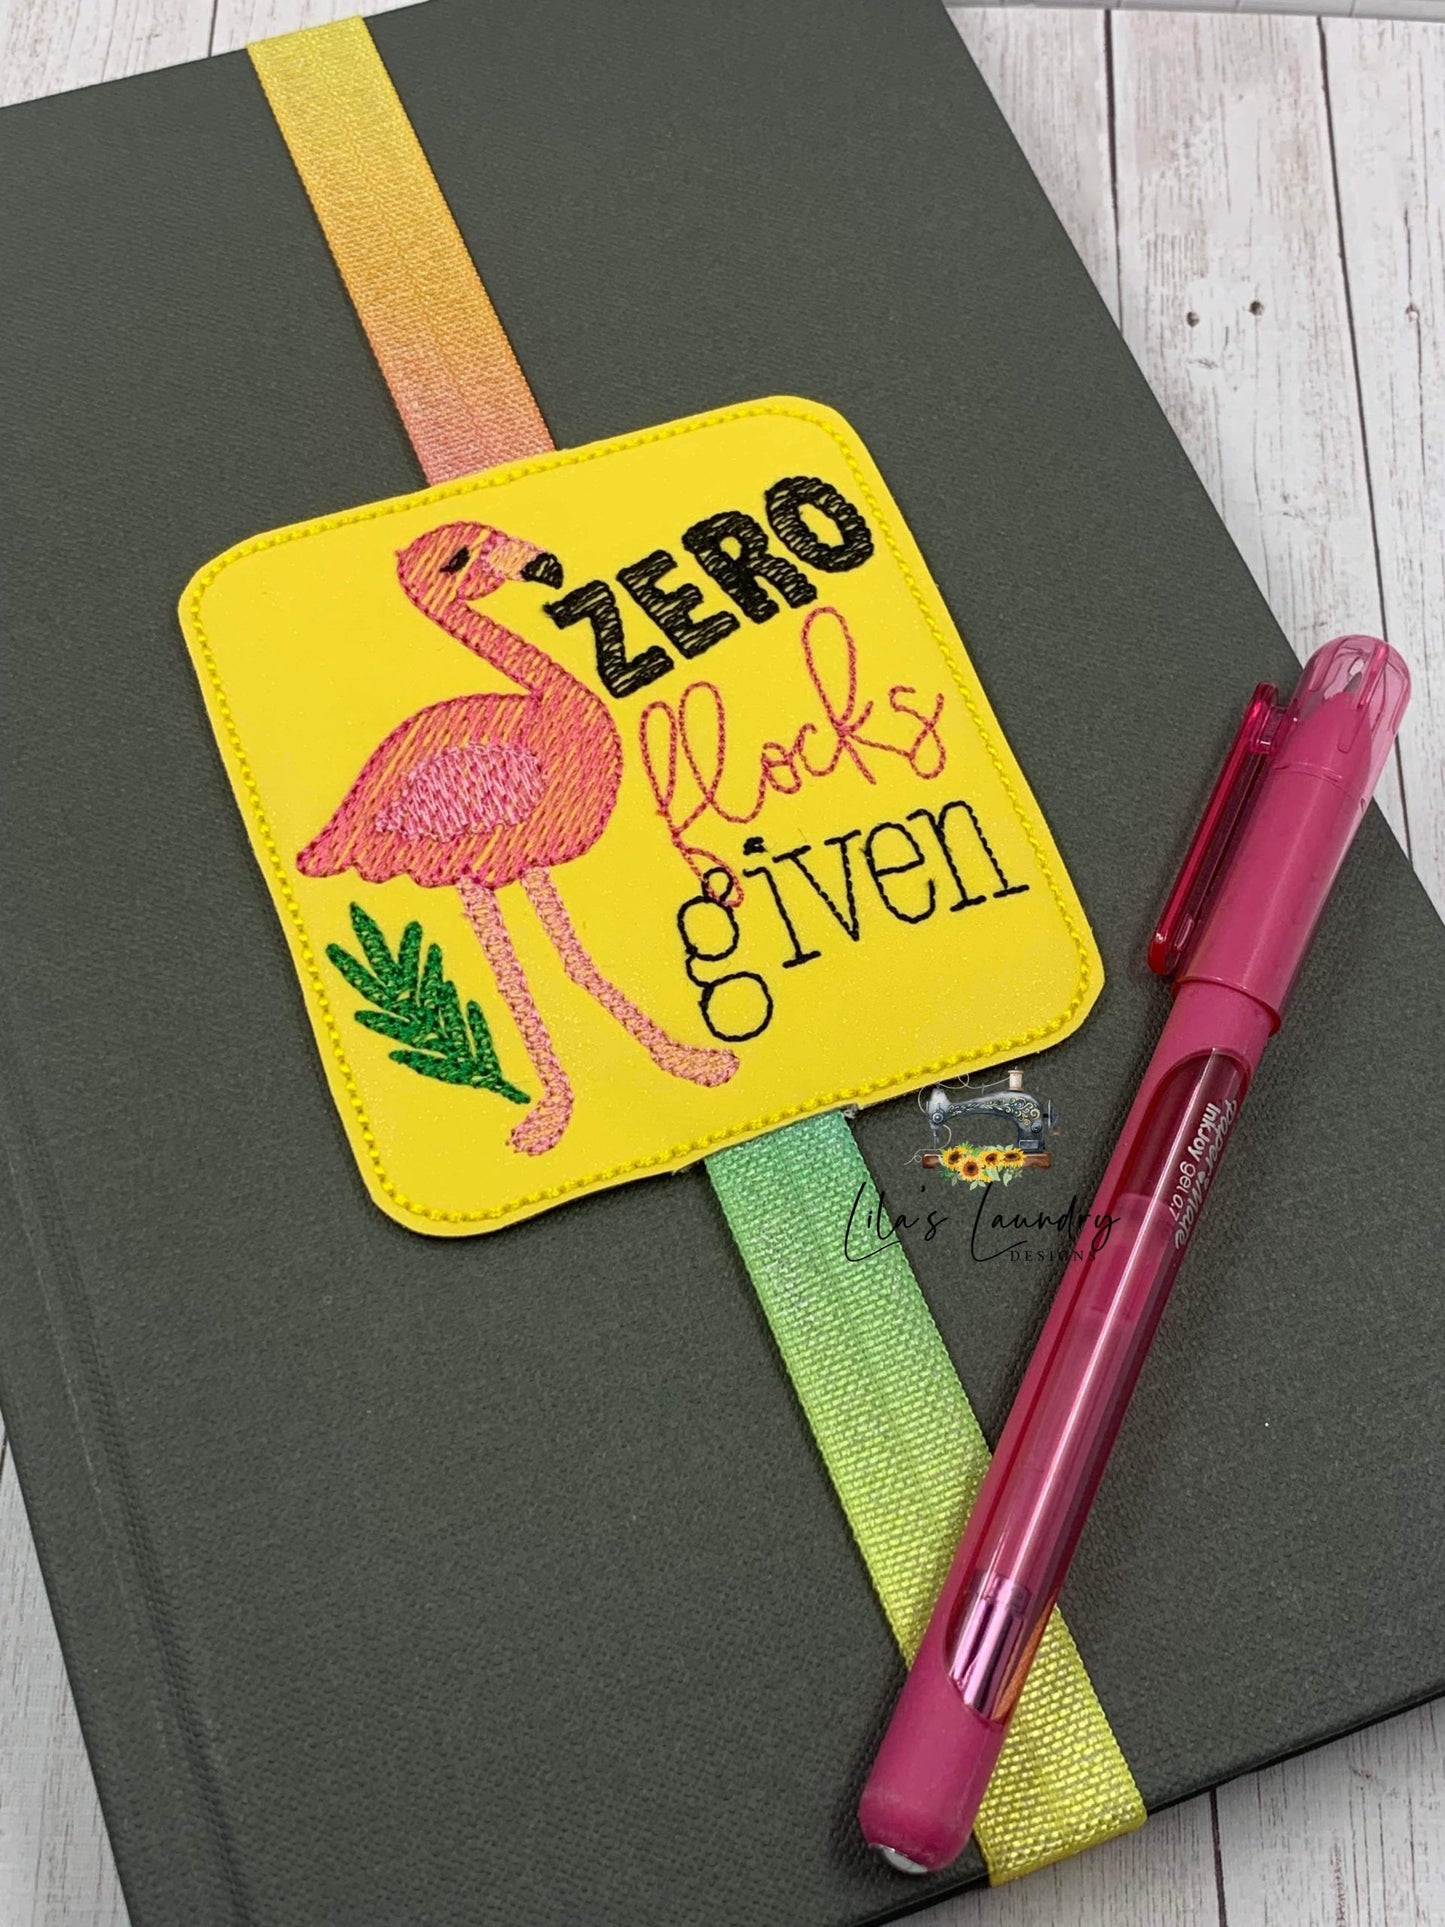 Zero Flocks Given Book Band - Embroidery Design, Digital File